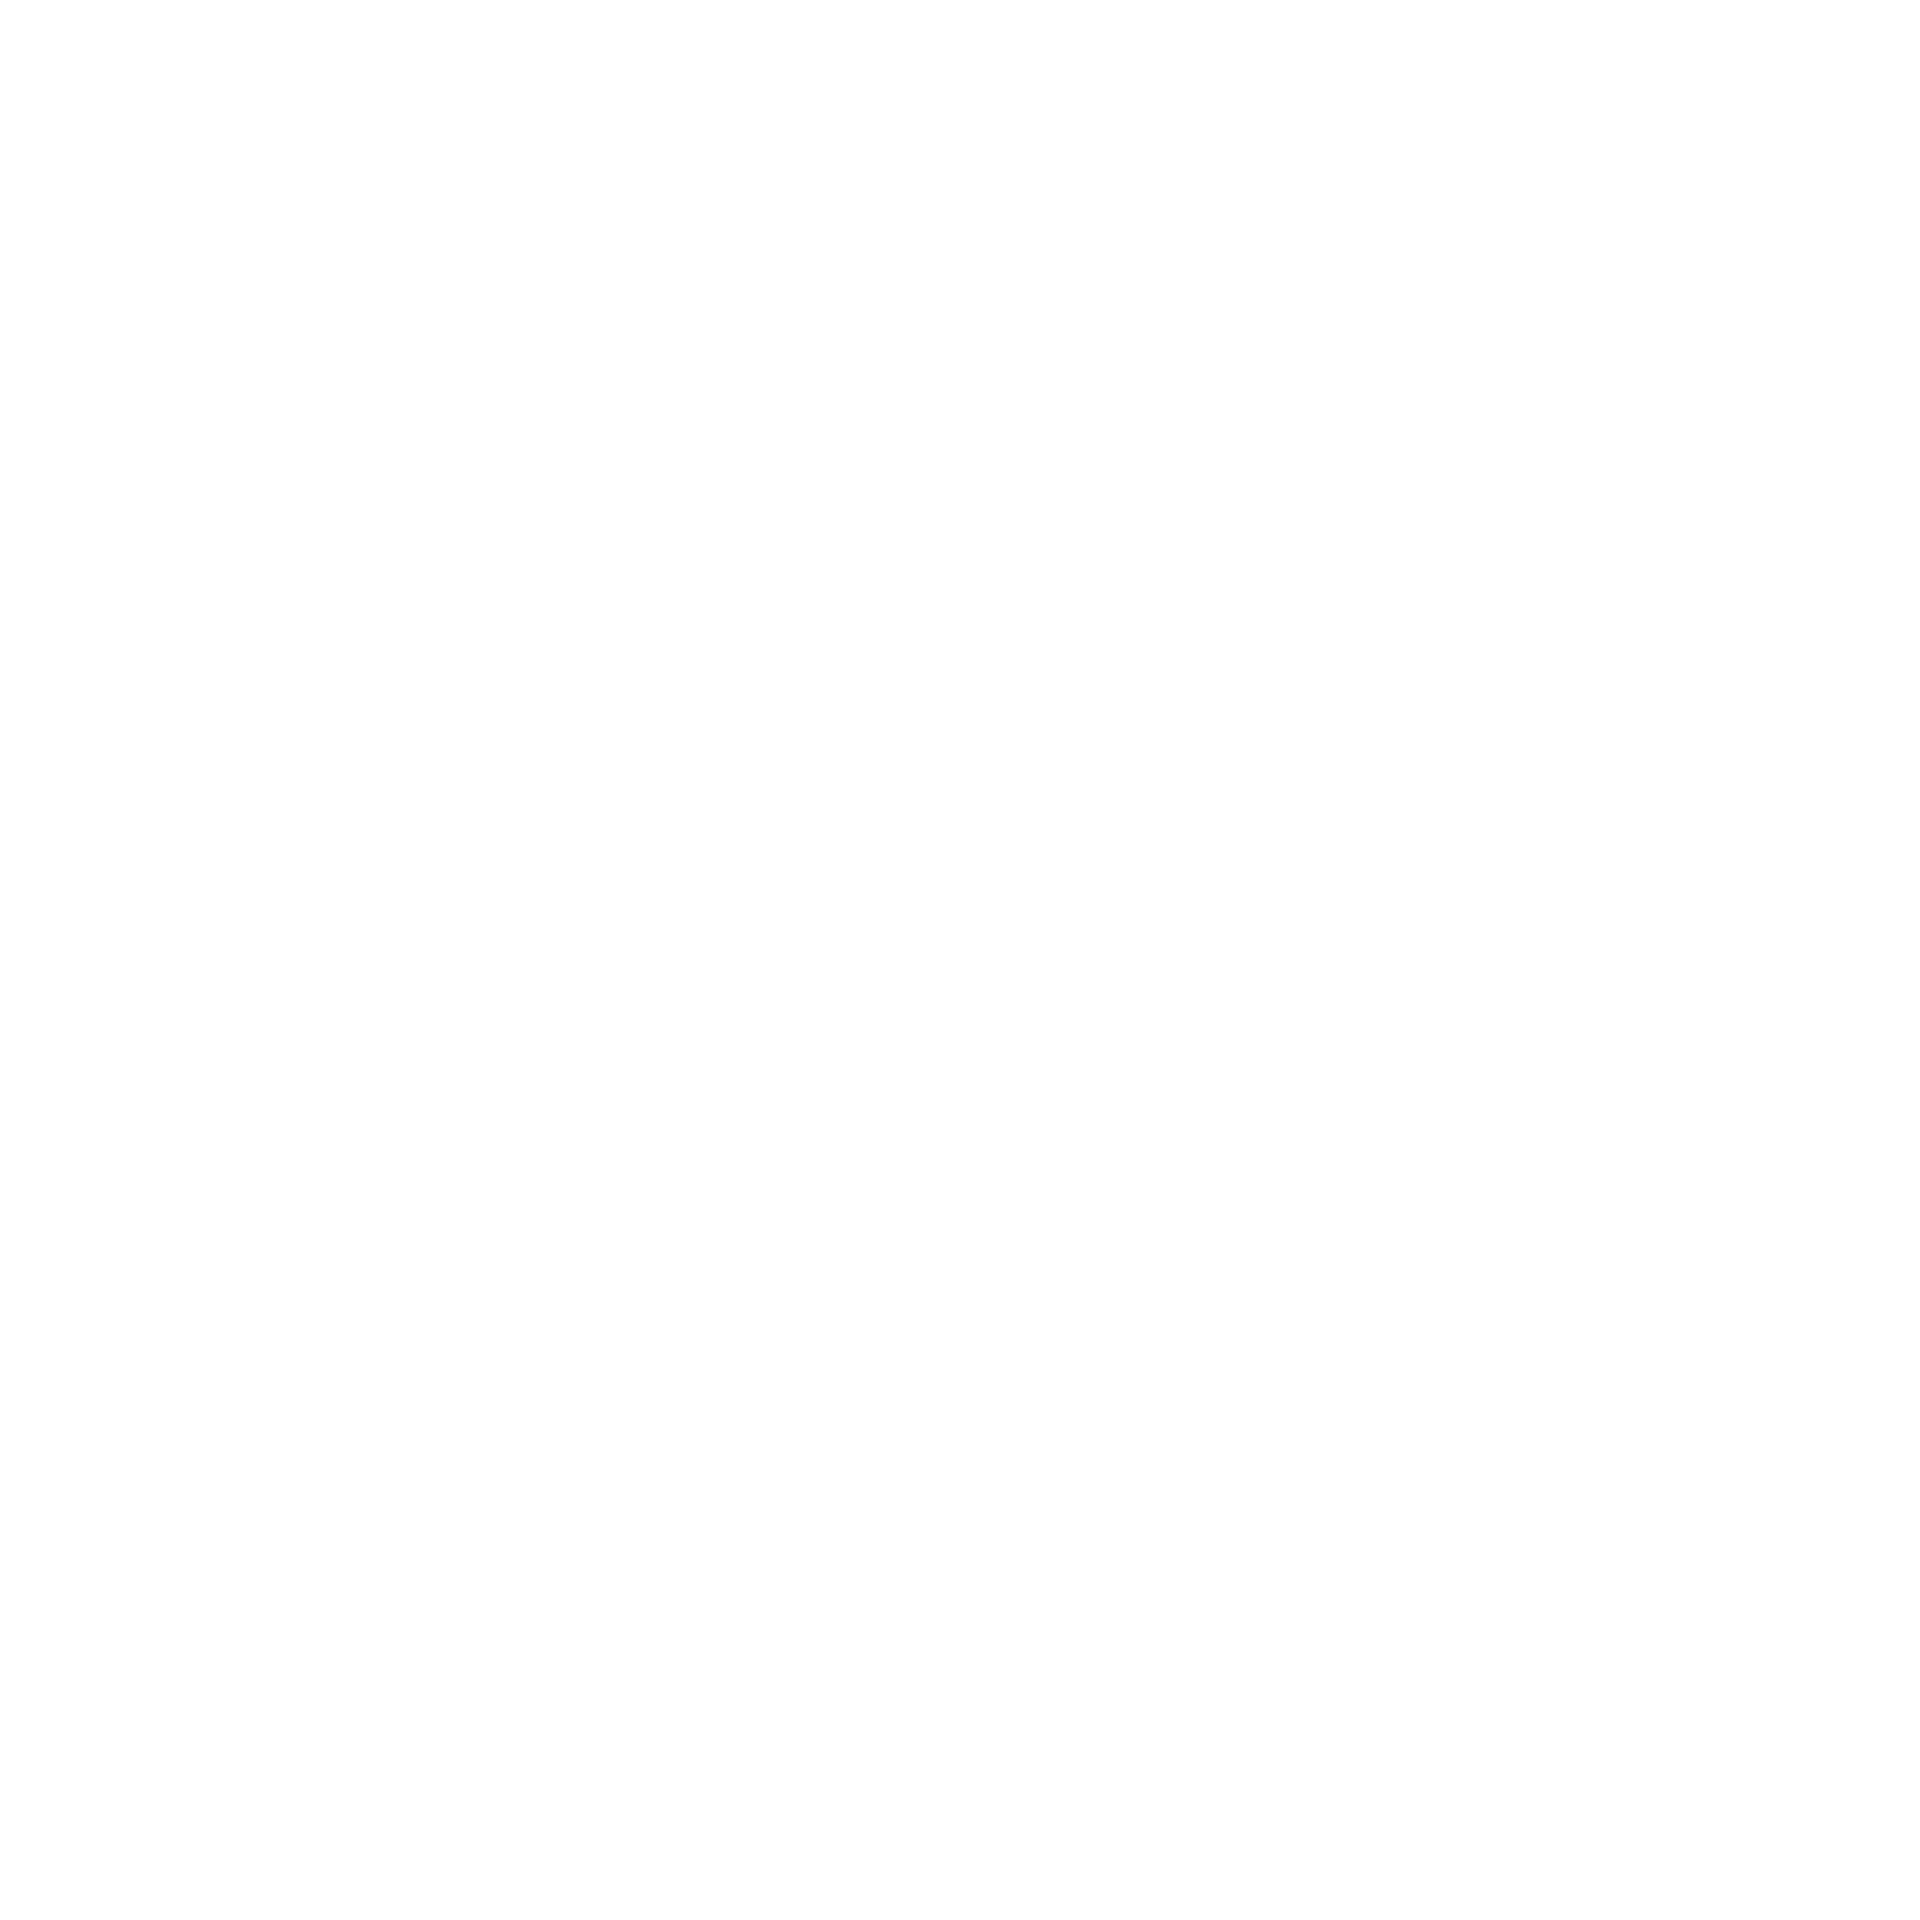 IPL cricket betting